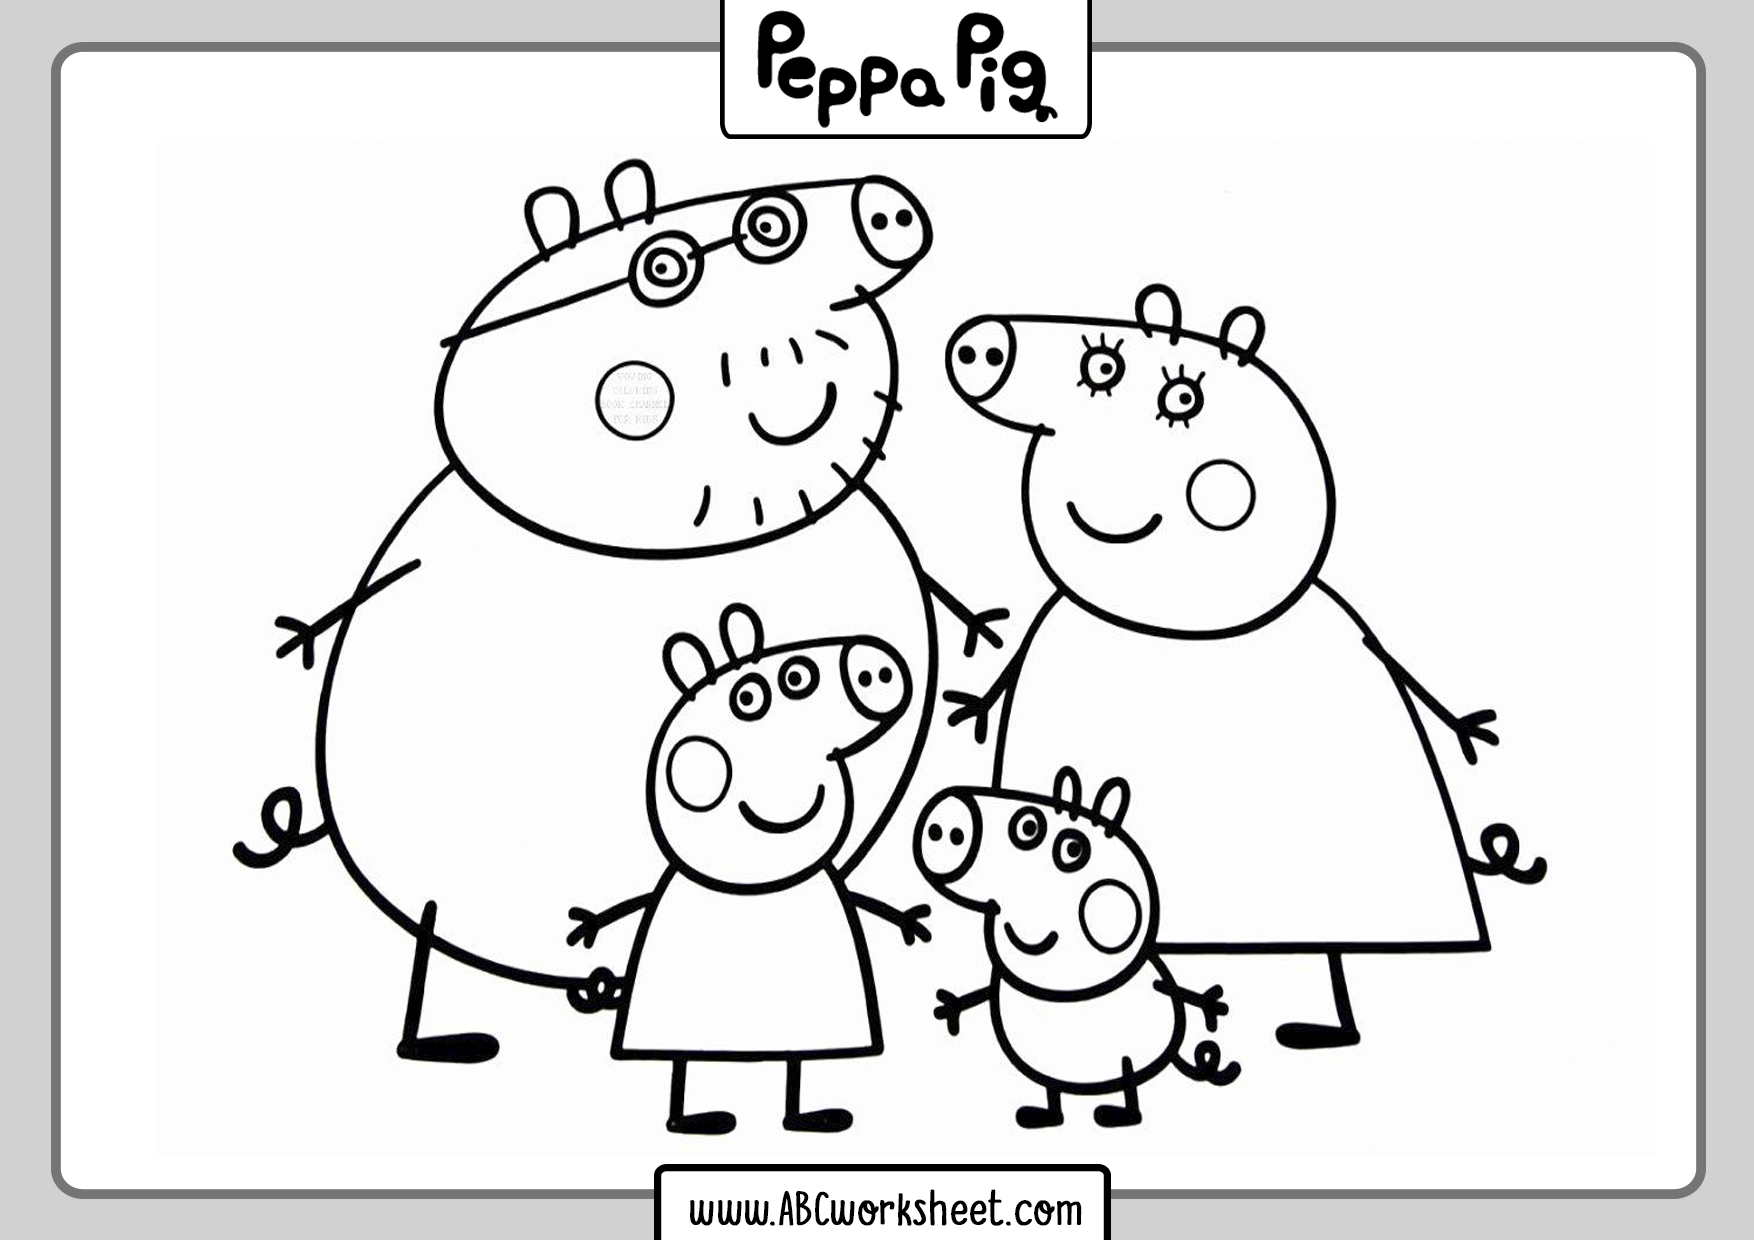 Peppa Pig Worksheets for Kids